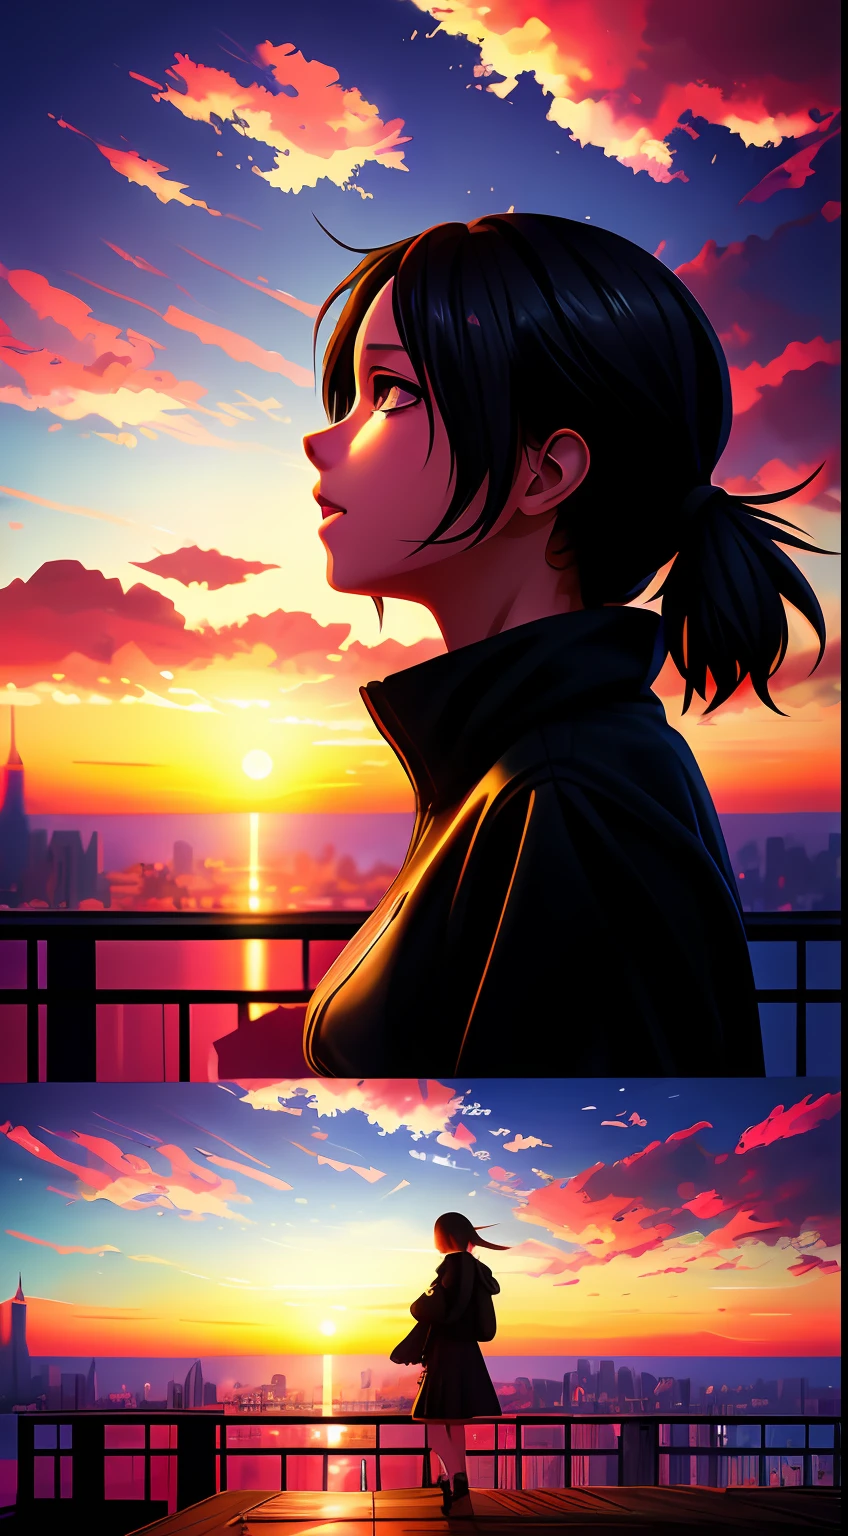 a girl watches the sunset from a rooftop Макото Синкай, Макото Синкай, Макото Синкай Сирил Роландо, стиль Макото Синкай, аниме. Макото Синкай, realistic аниме 3 d style, работа в стиле Гувейза, in стиль Макото Синкай